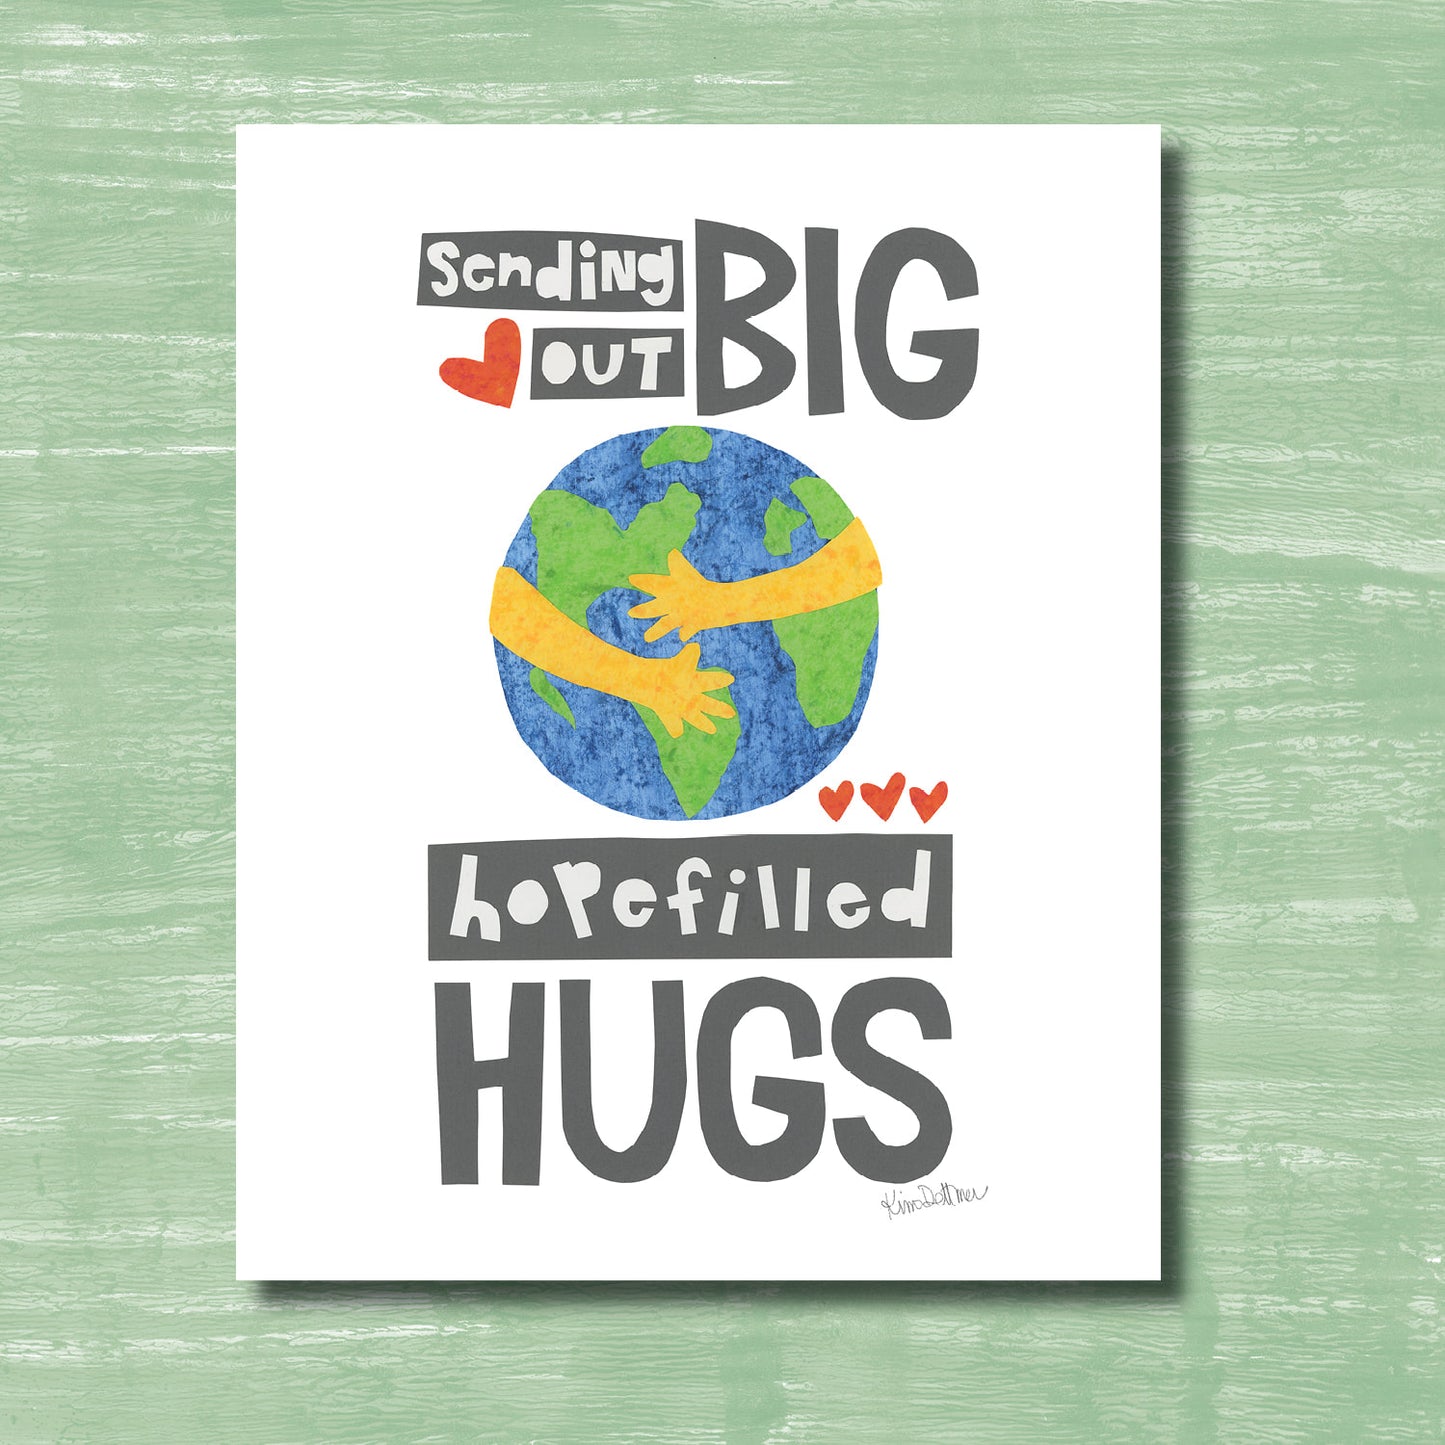 Sending Out Big Hugs (print)